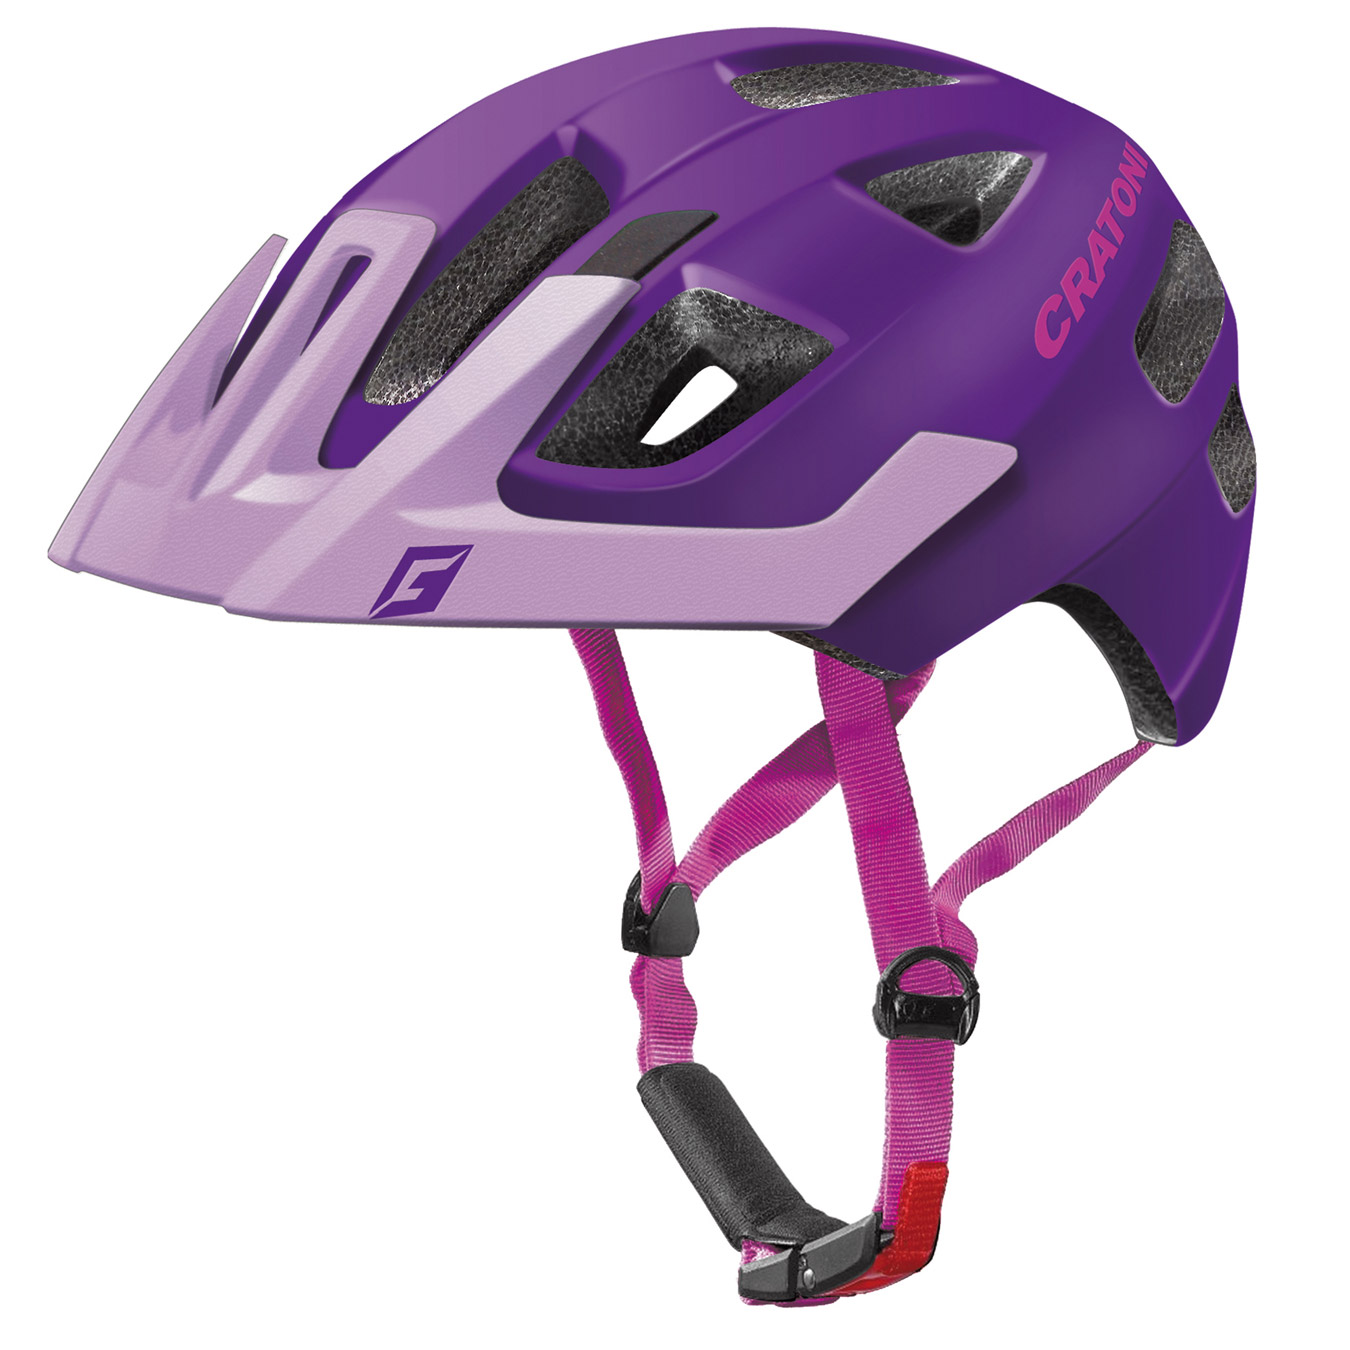 Cratoni Maxster Pro gives kids a proper ventilated helmet